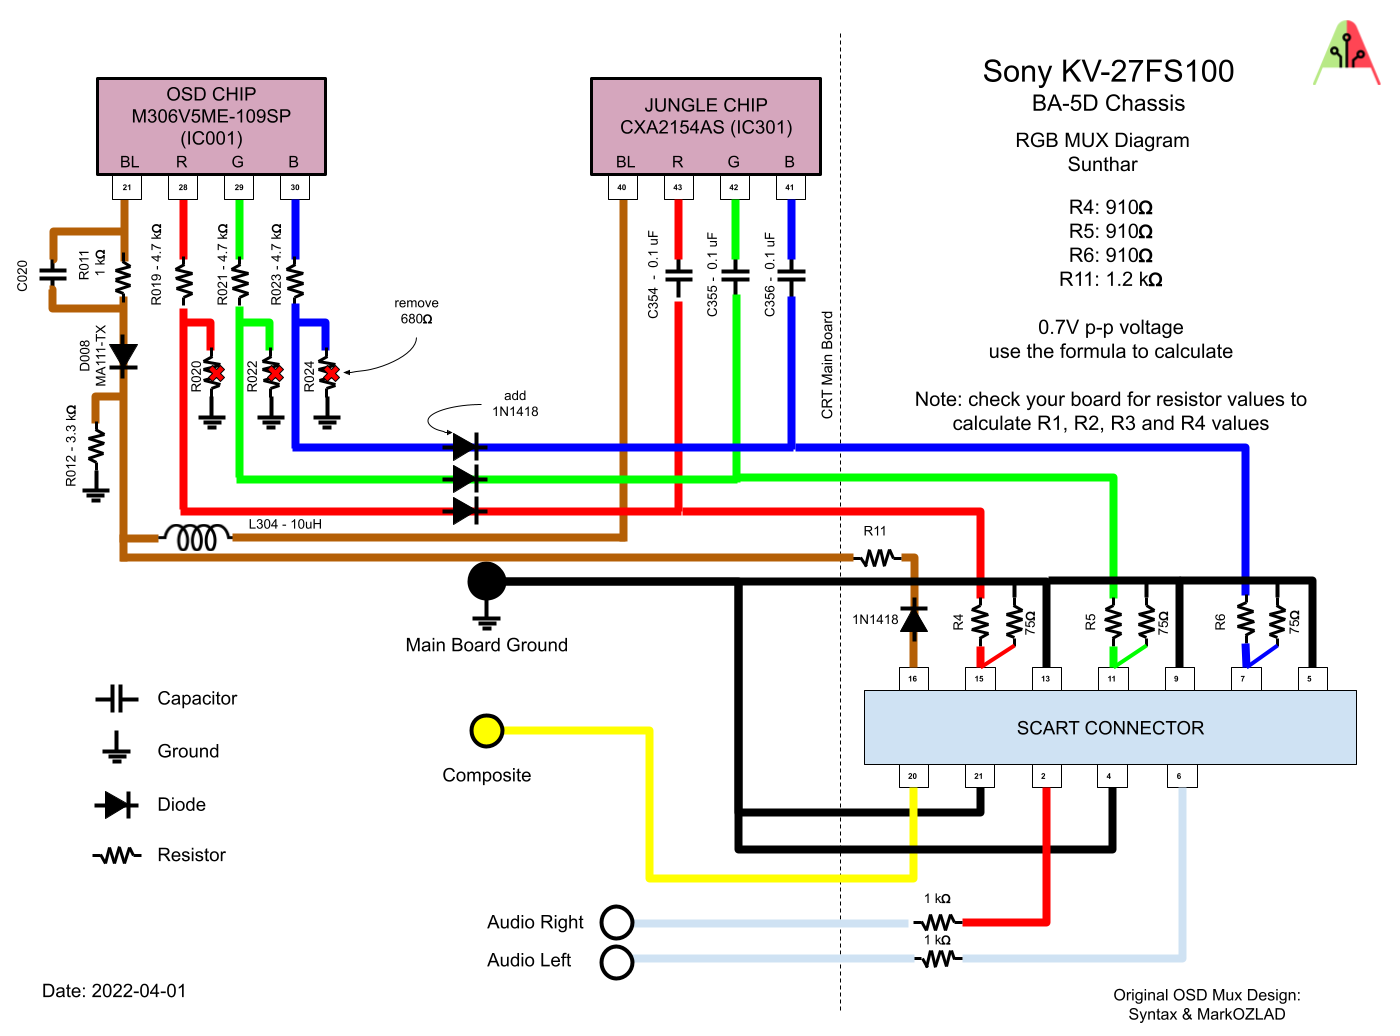 Sony BA-5D chassis RGB mod mux diagram